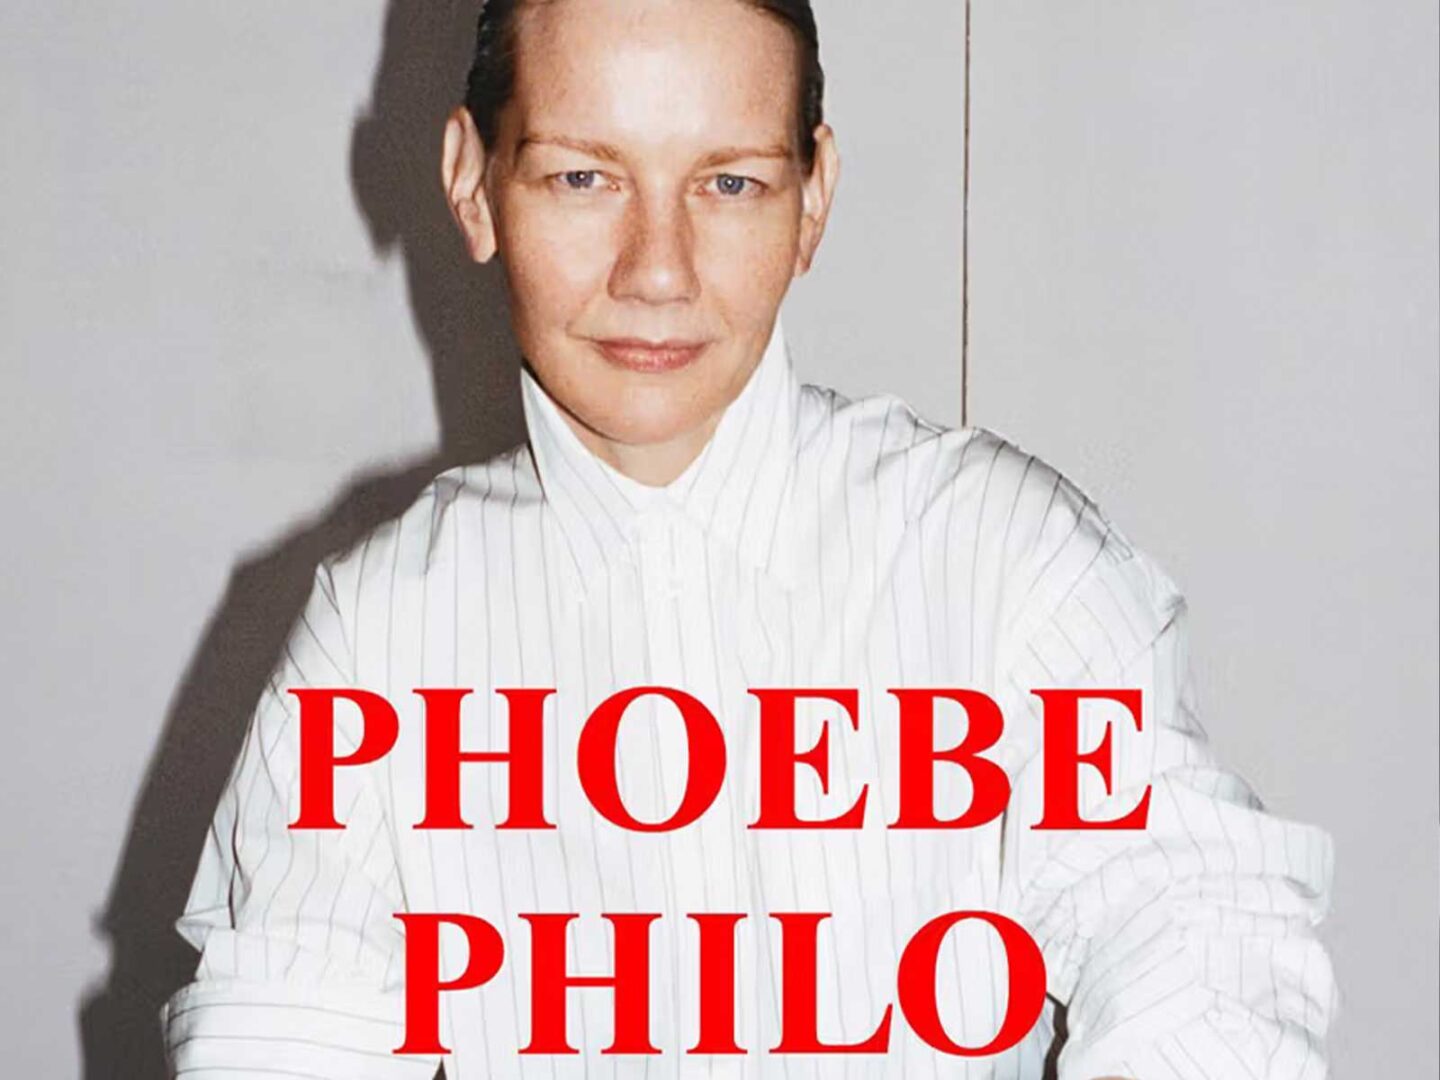 Phoebe Philo’s second drop is here